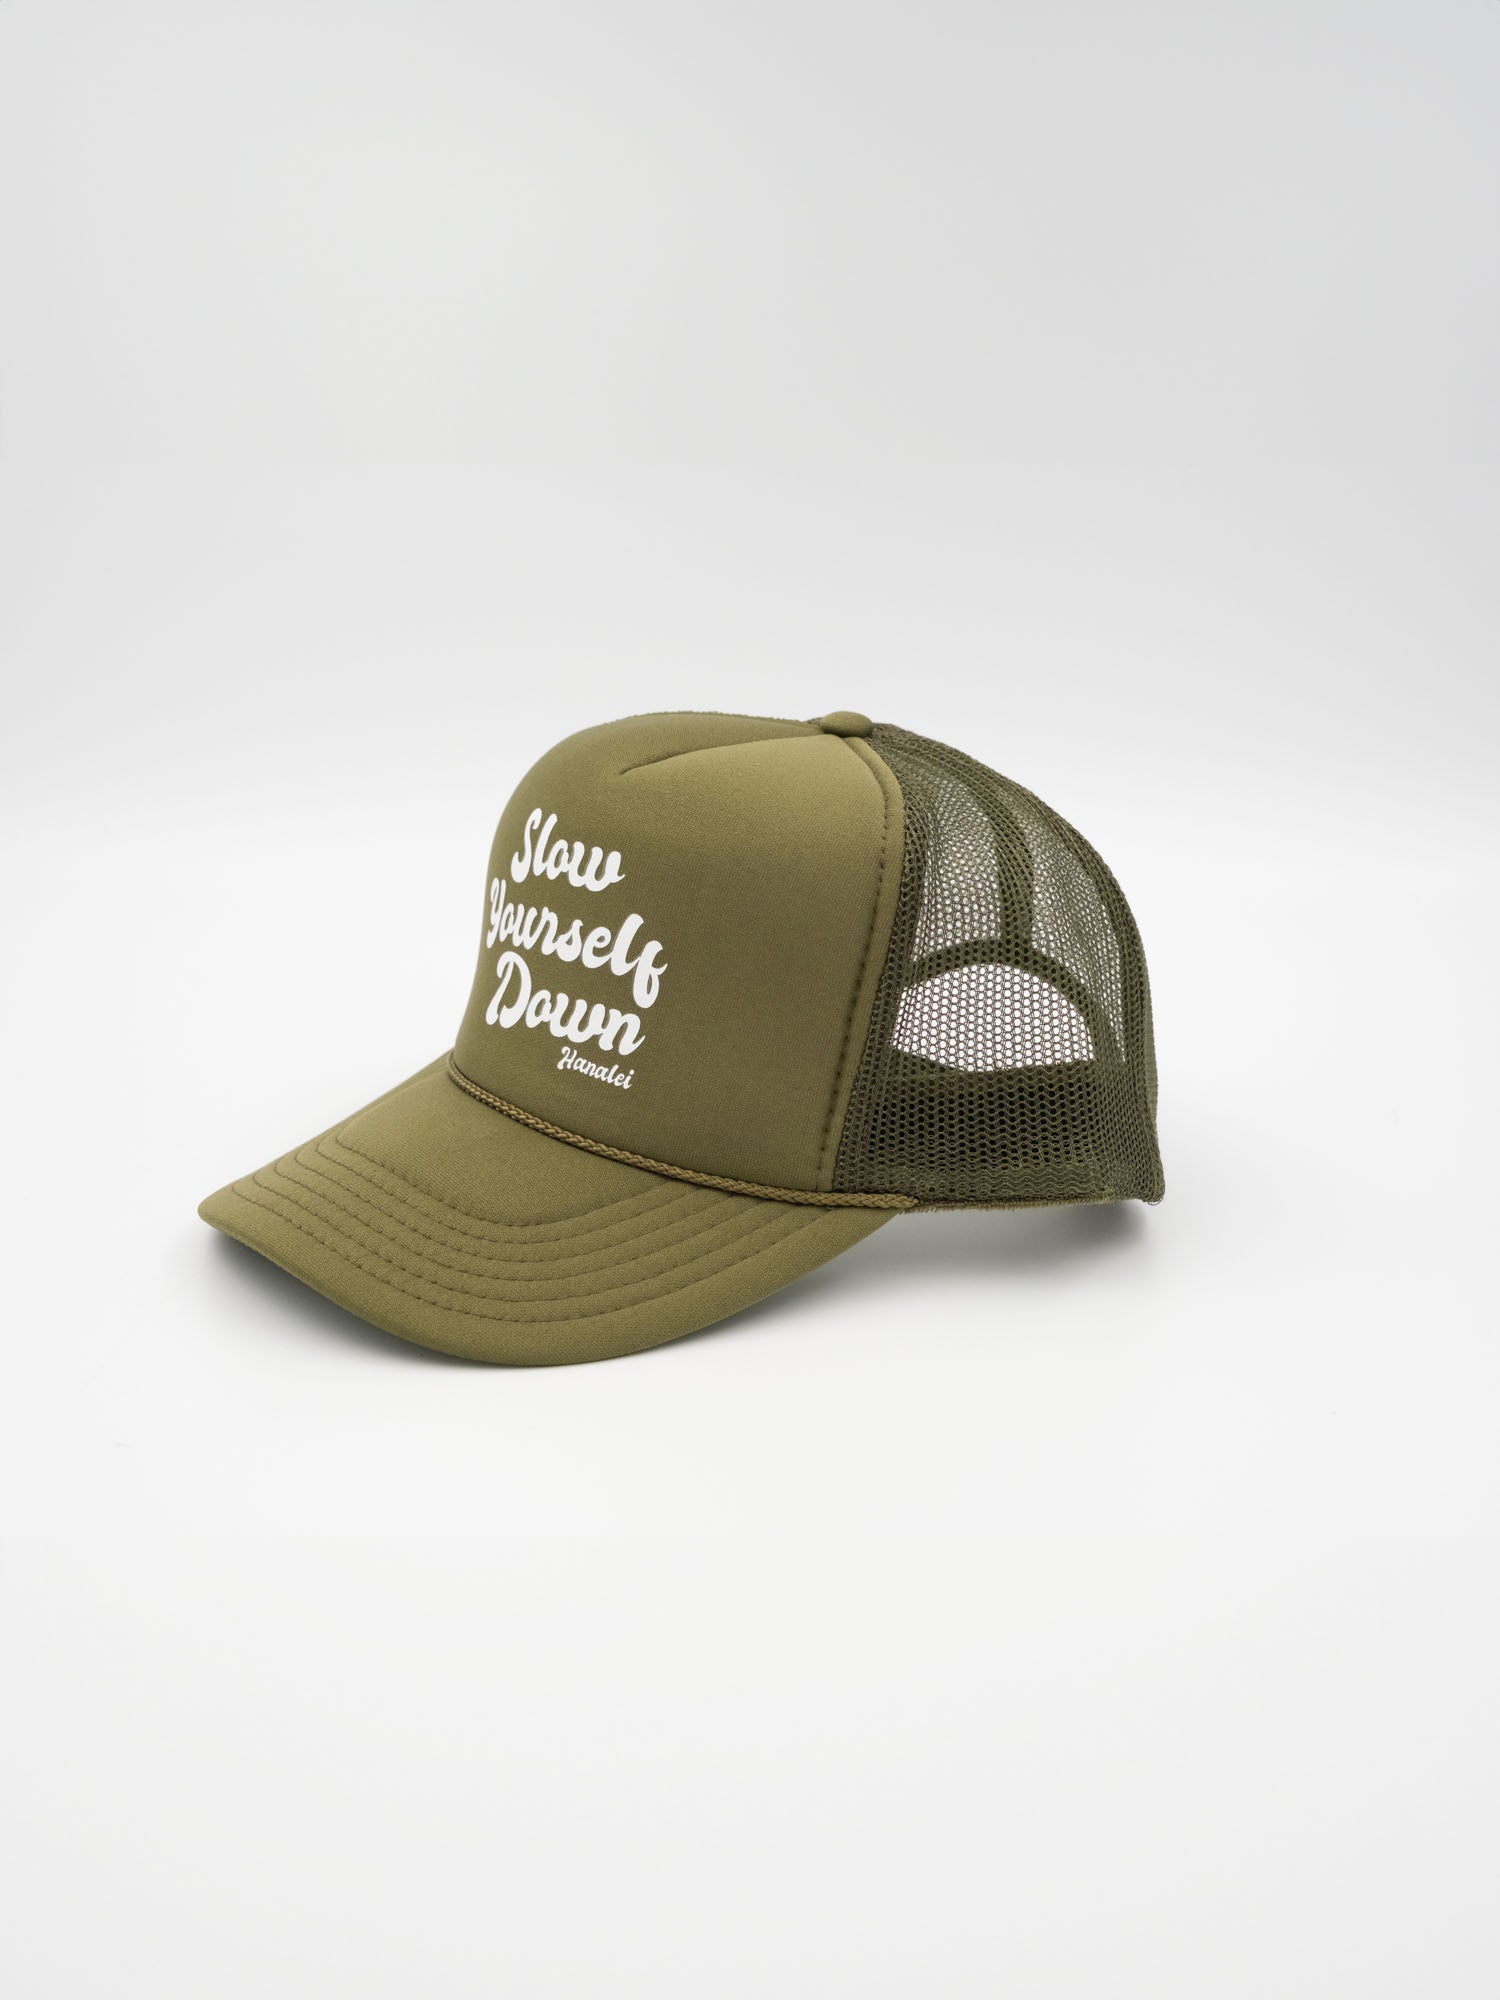 Slow Yourself Down Trucker Hat